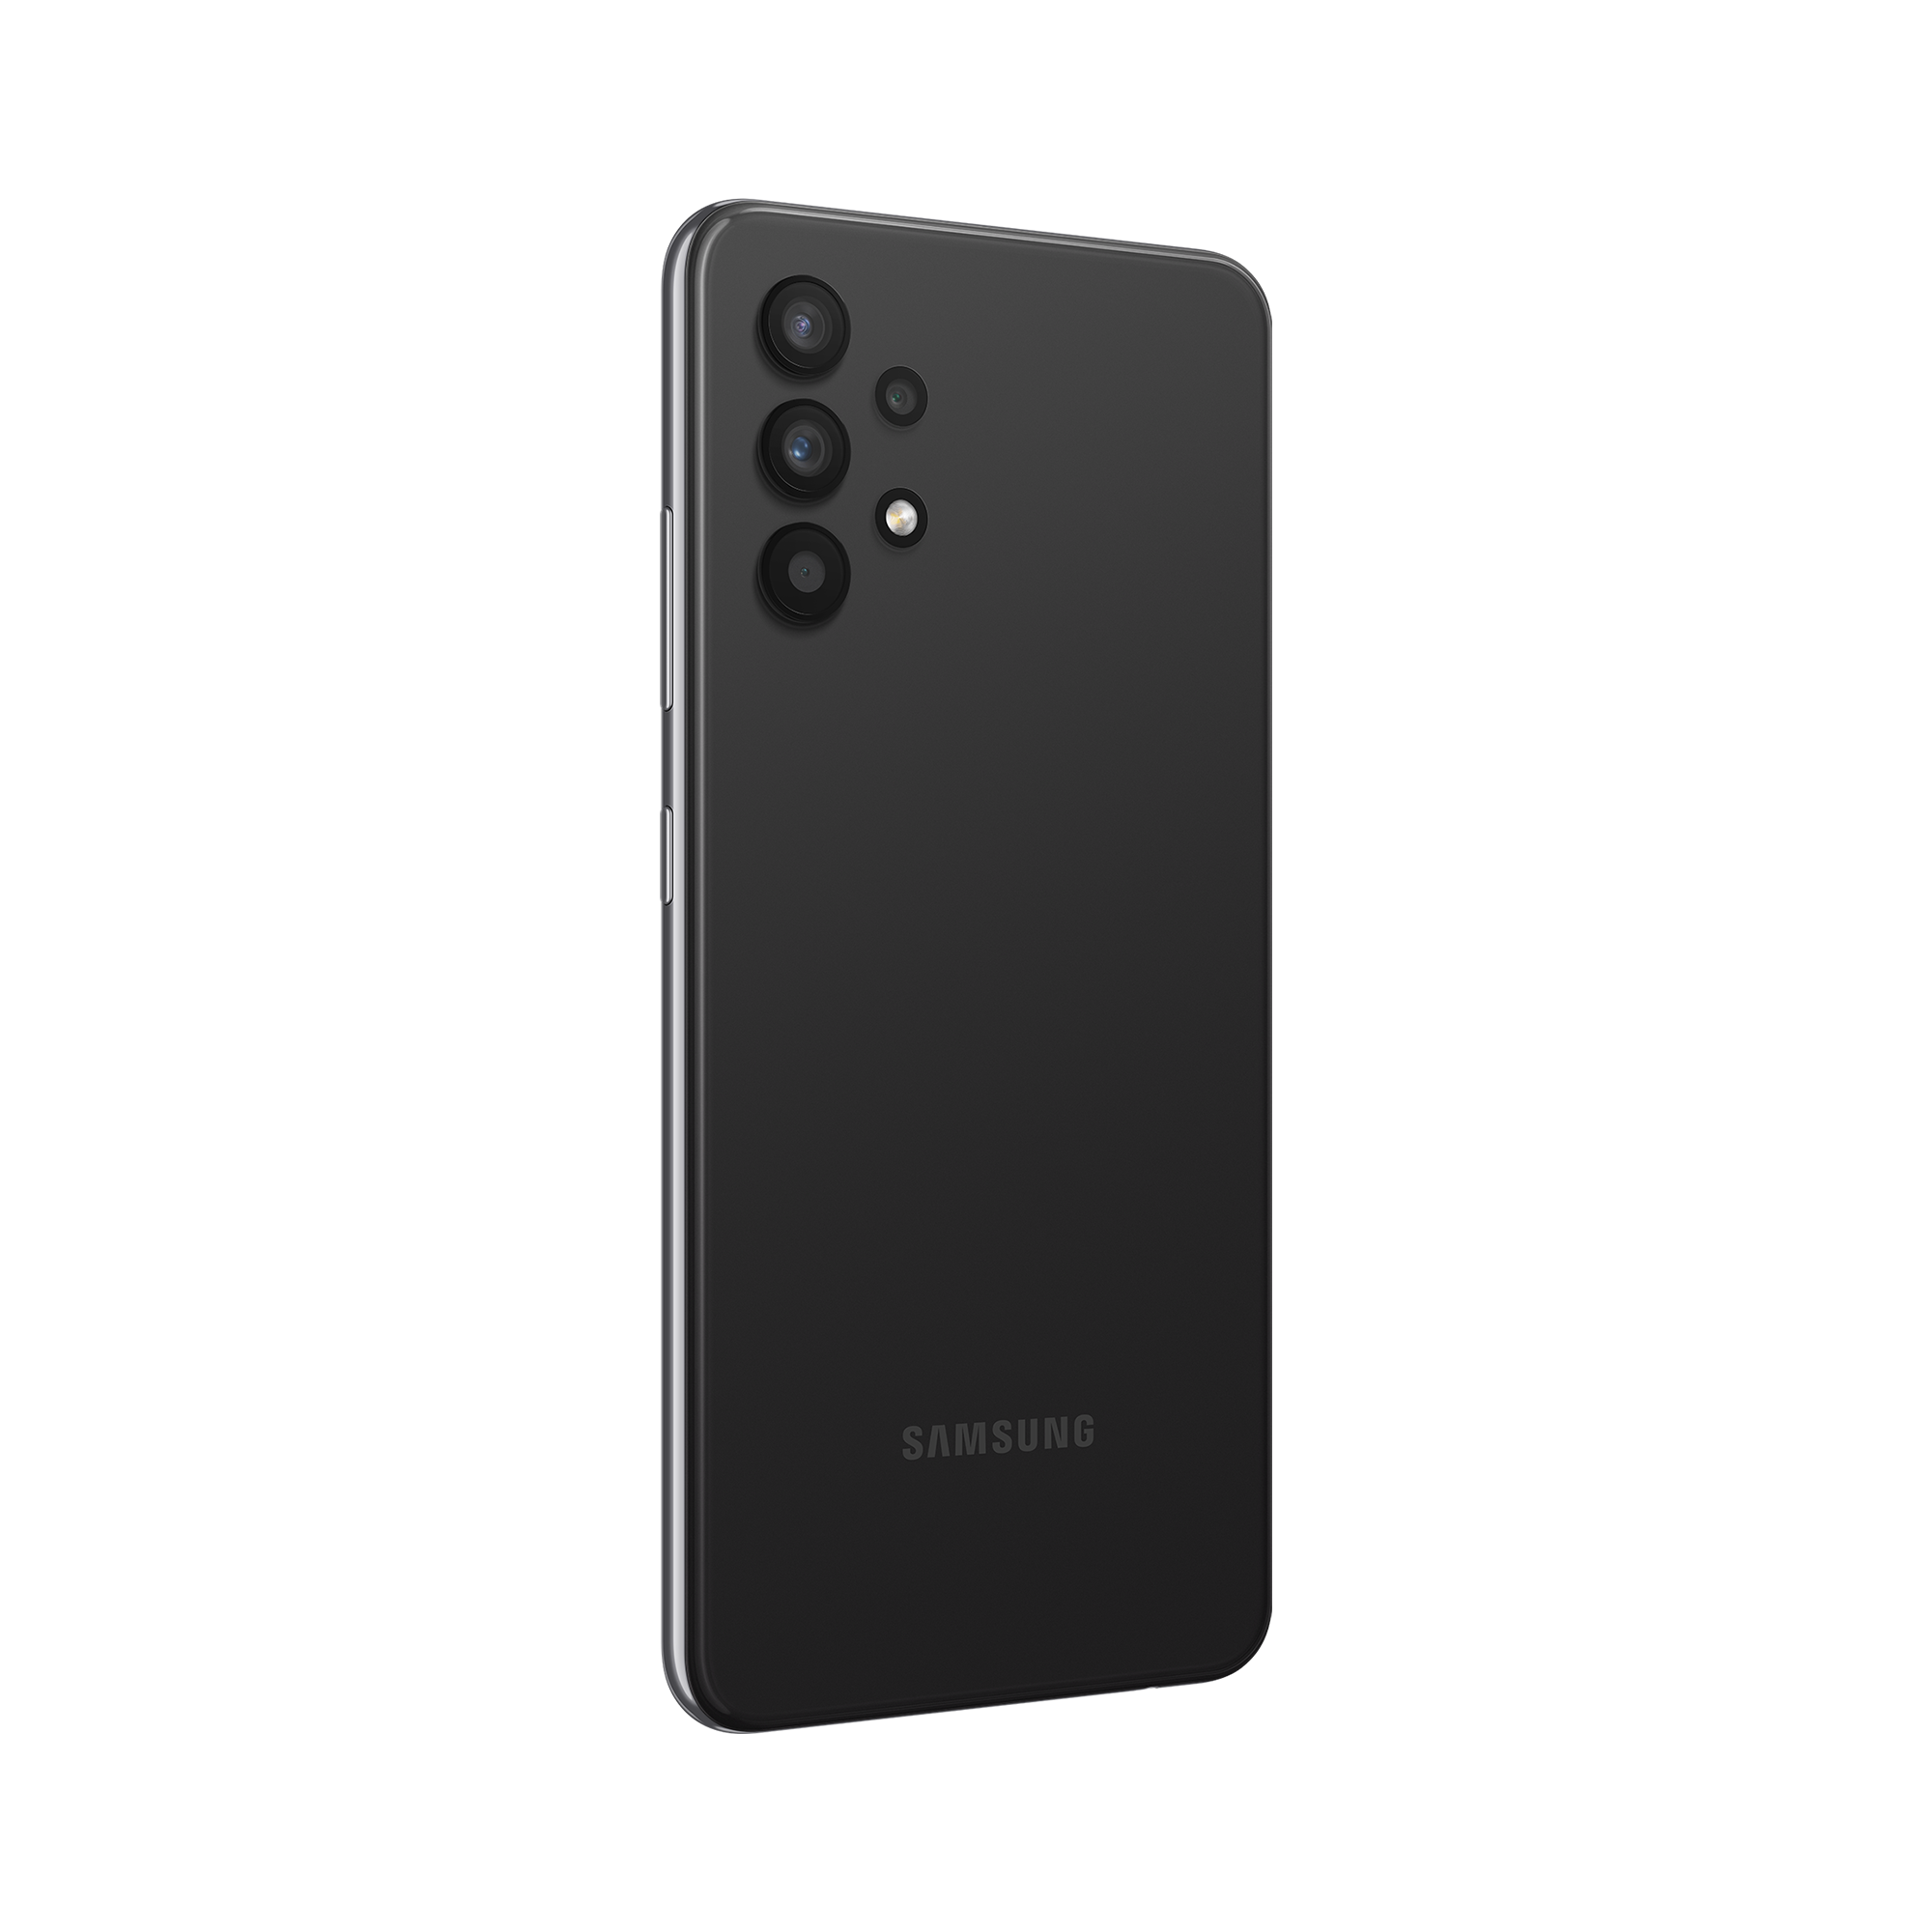 Samsung Galaxy A32 Awesome Black Back Left